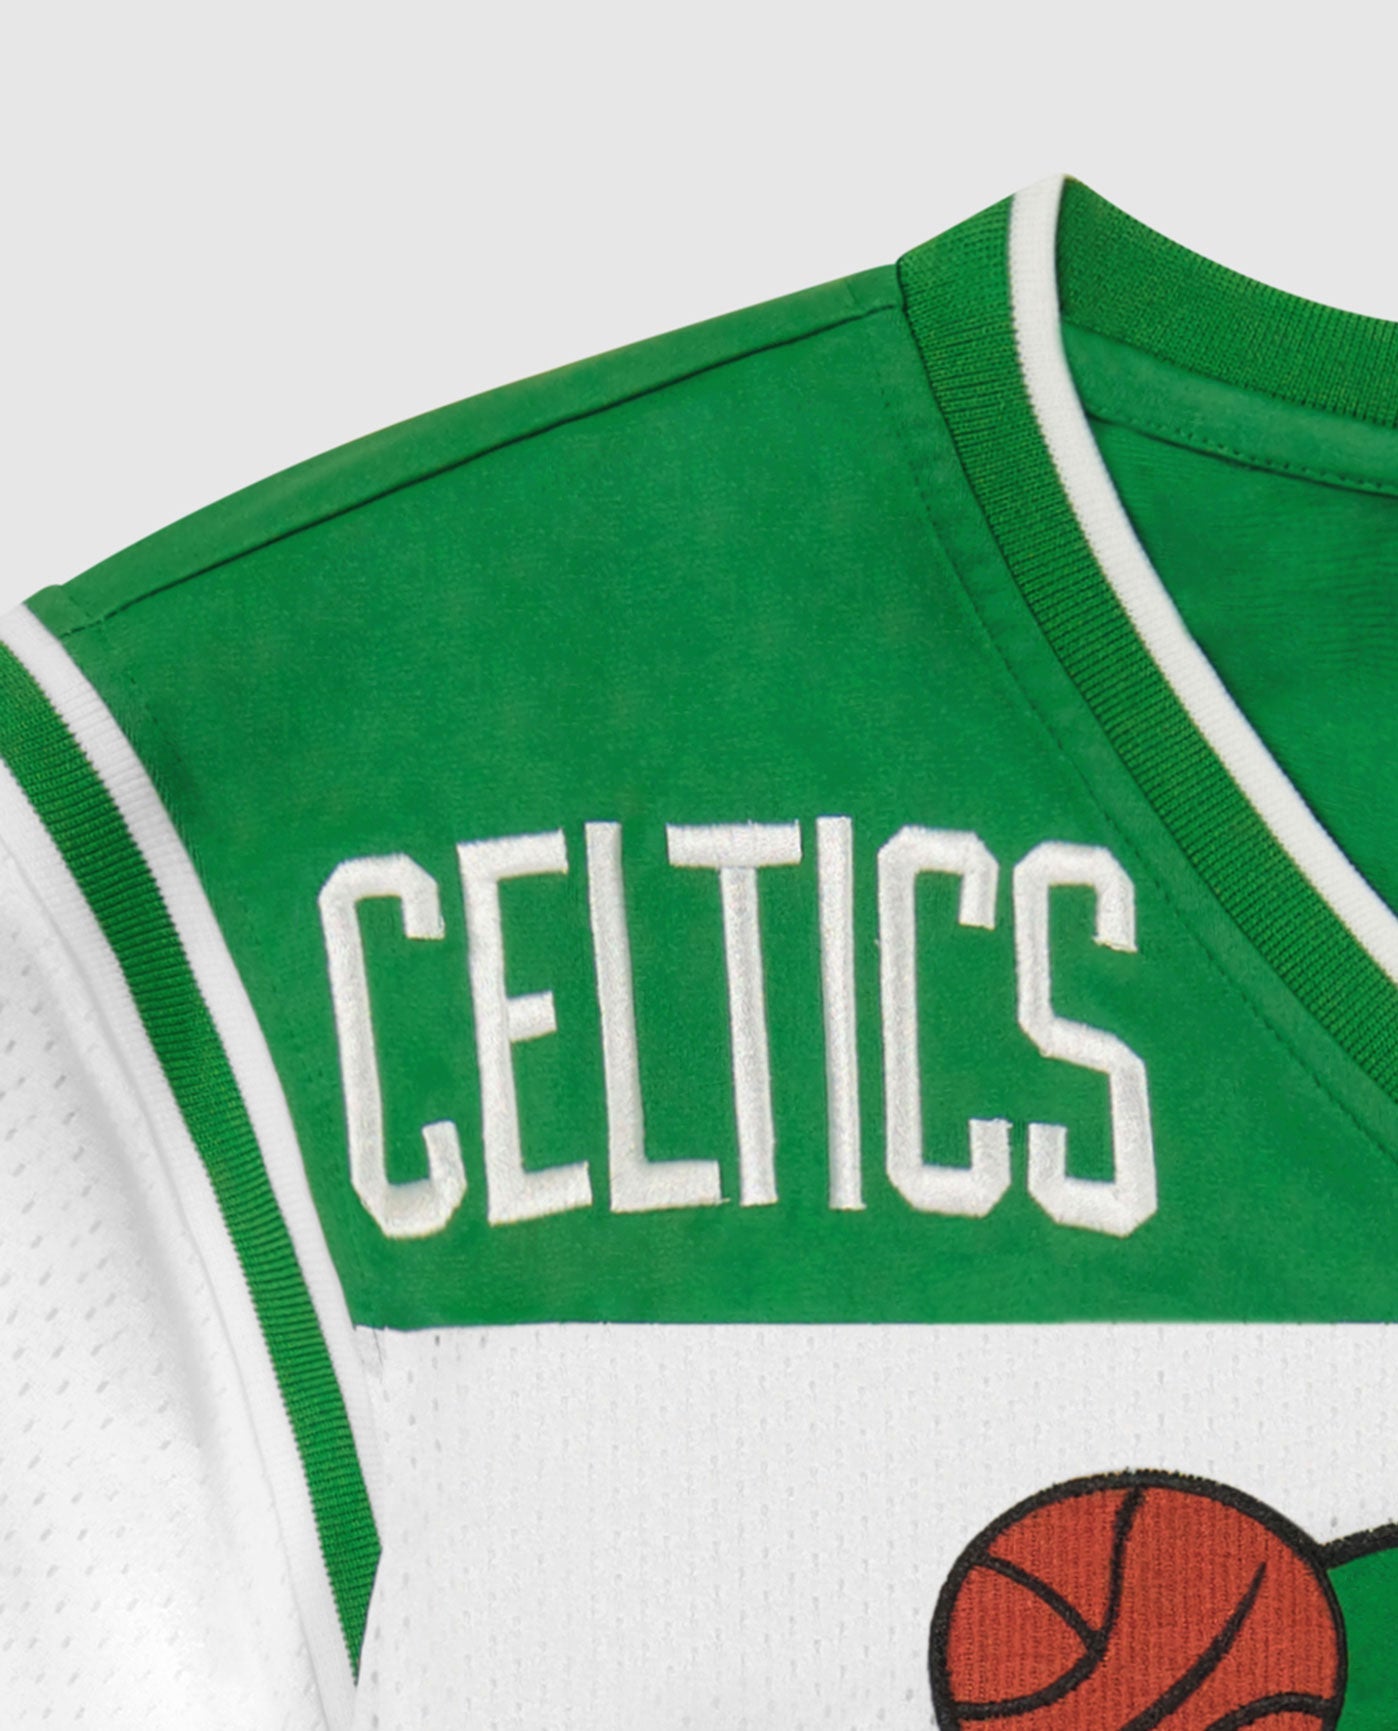 CELTICS logo writing below right sholder | Celtics White